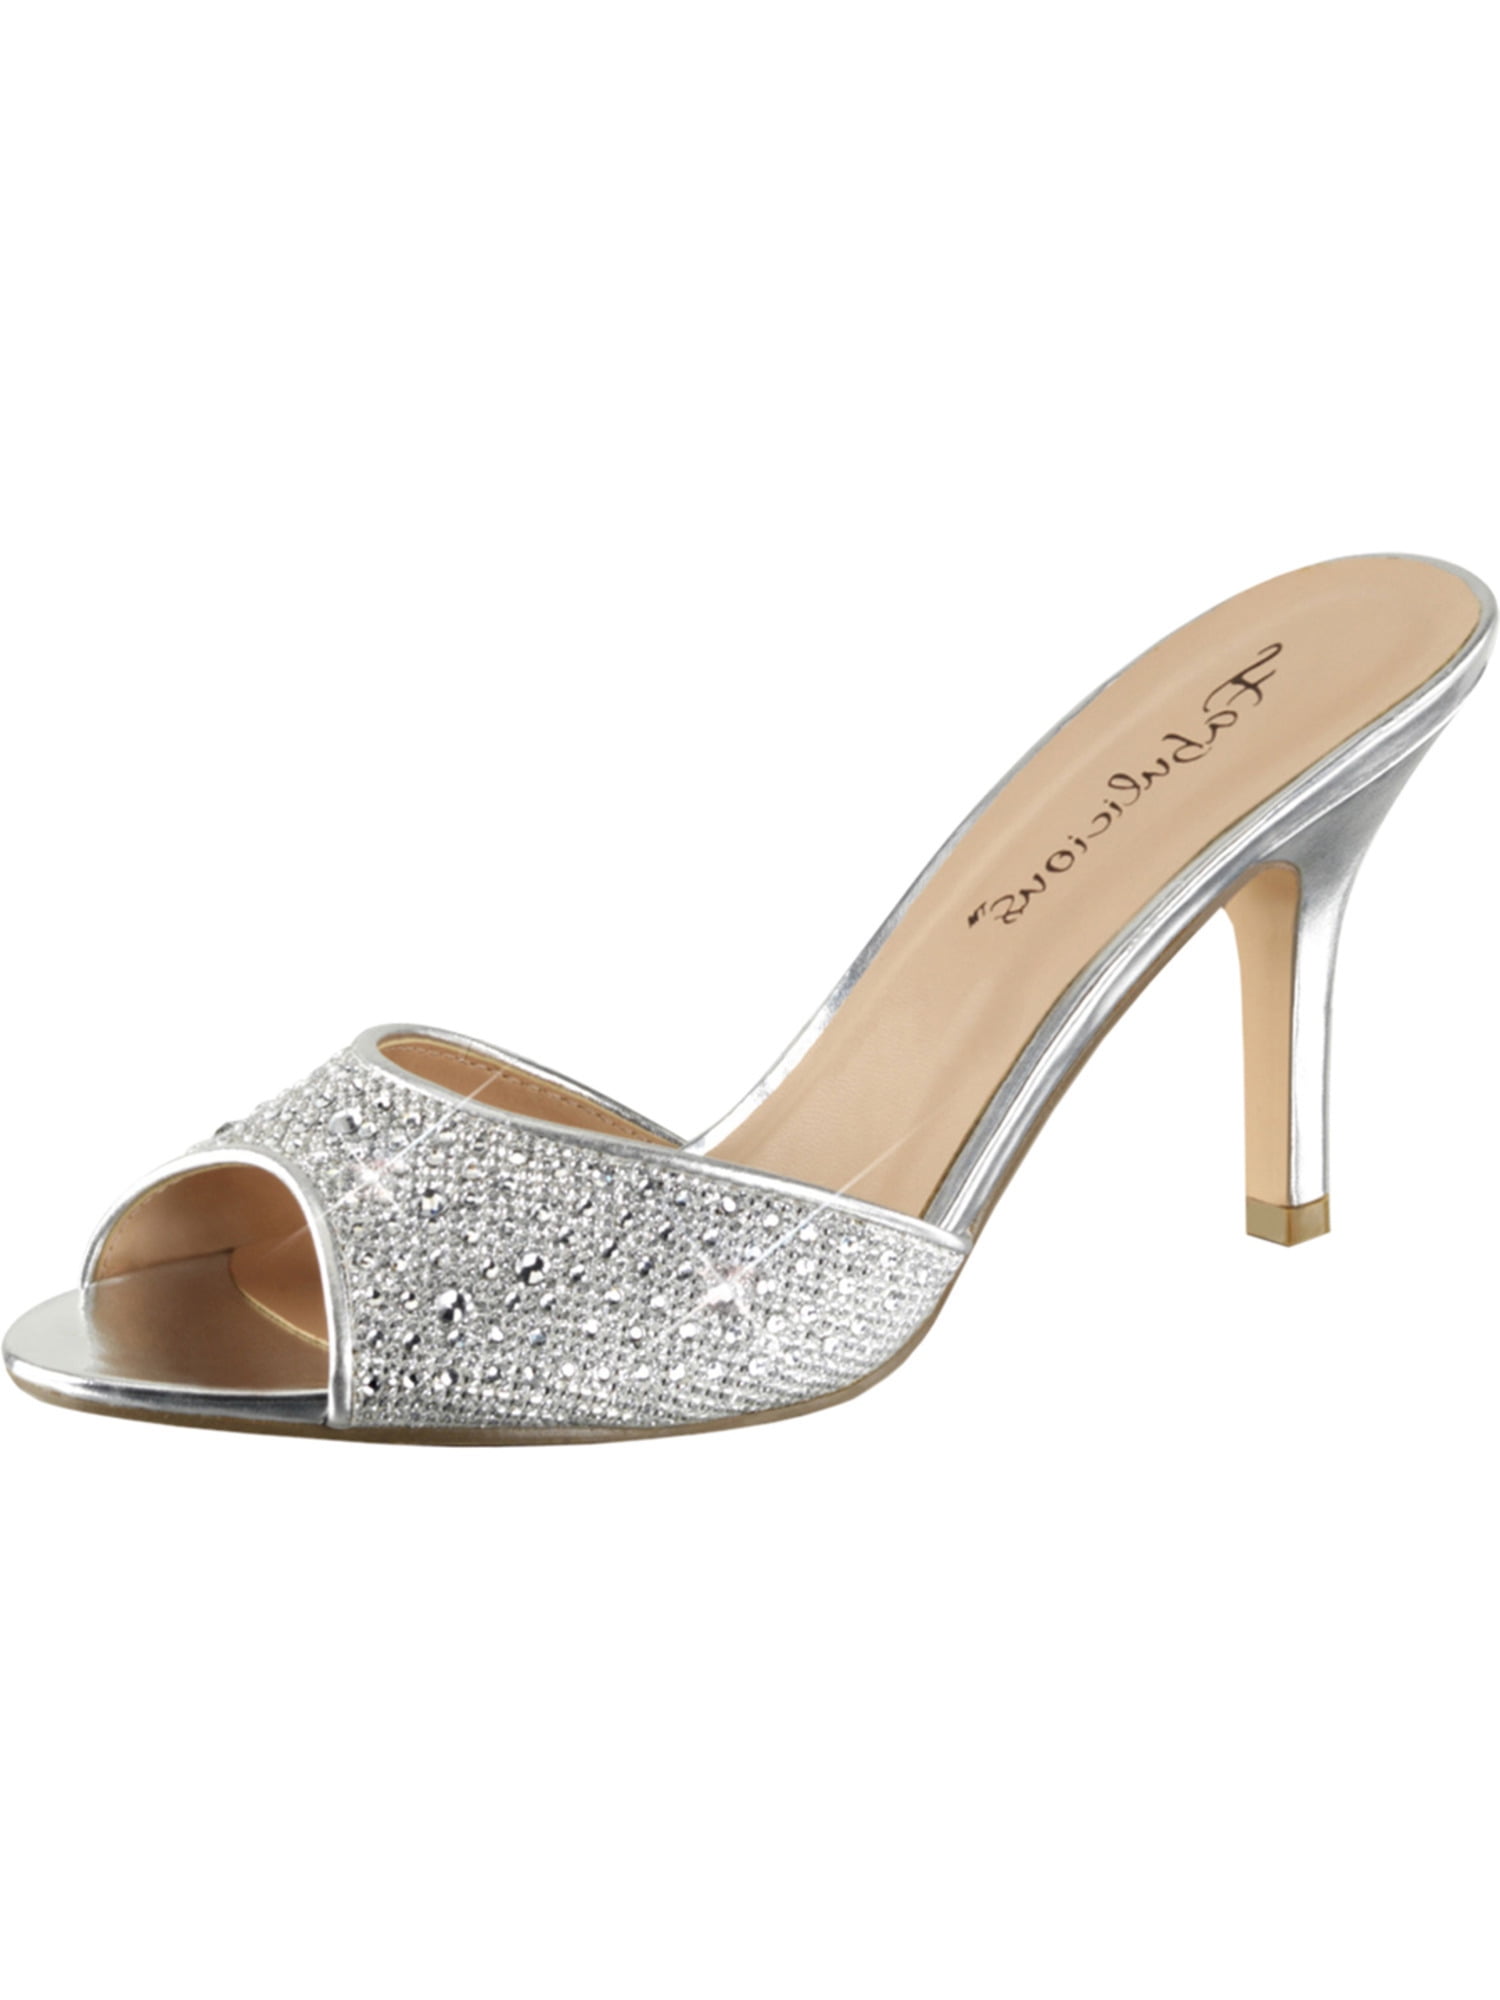 silver sandals 1 inch heel